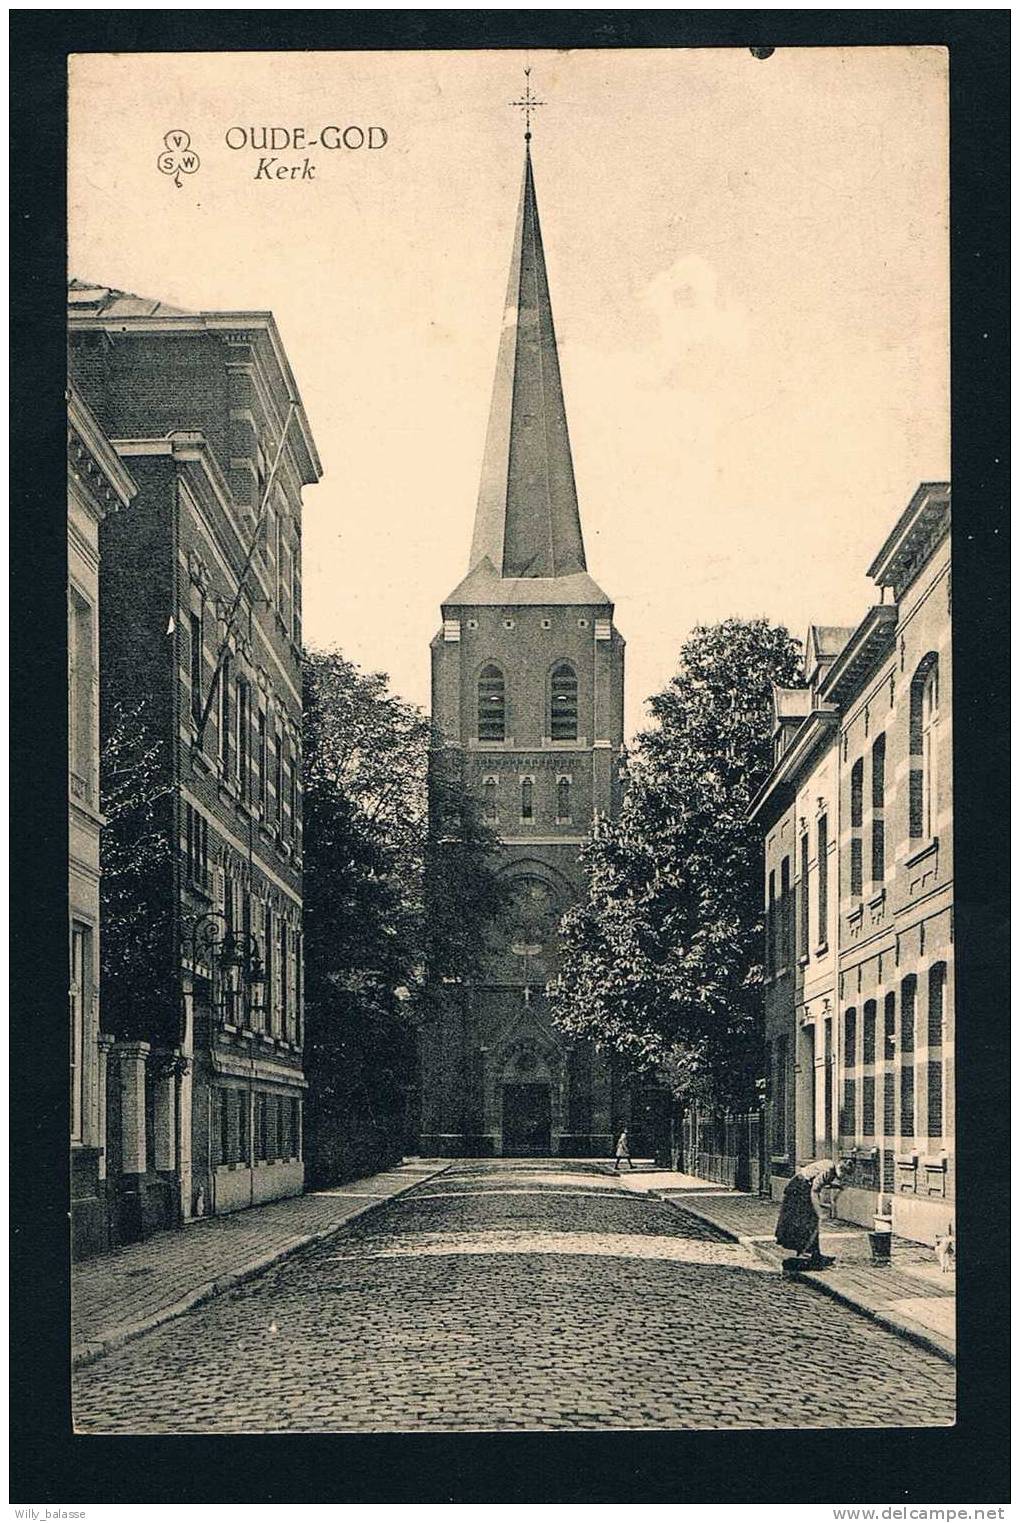 Carte Postale "Oude-god" Kerk - Mortsel